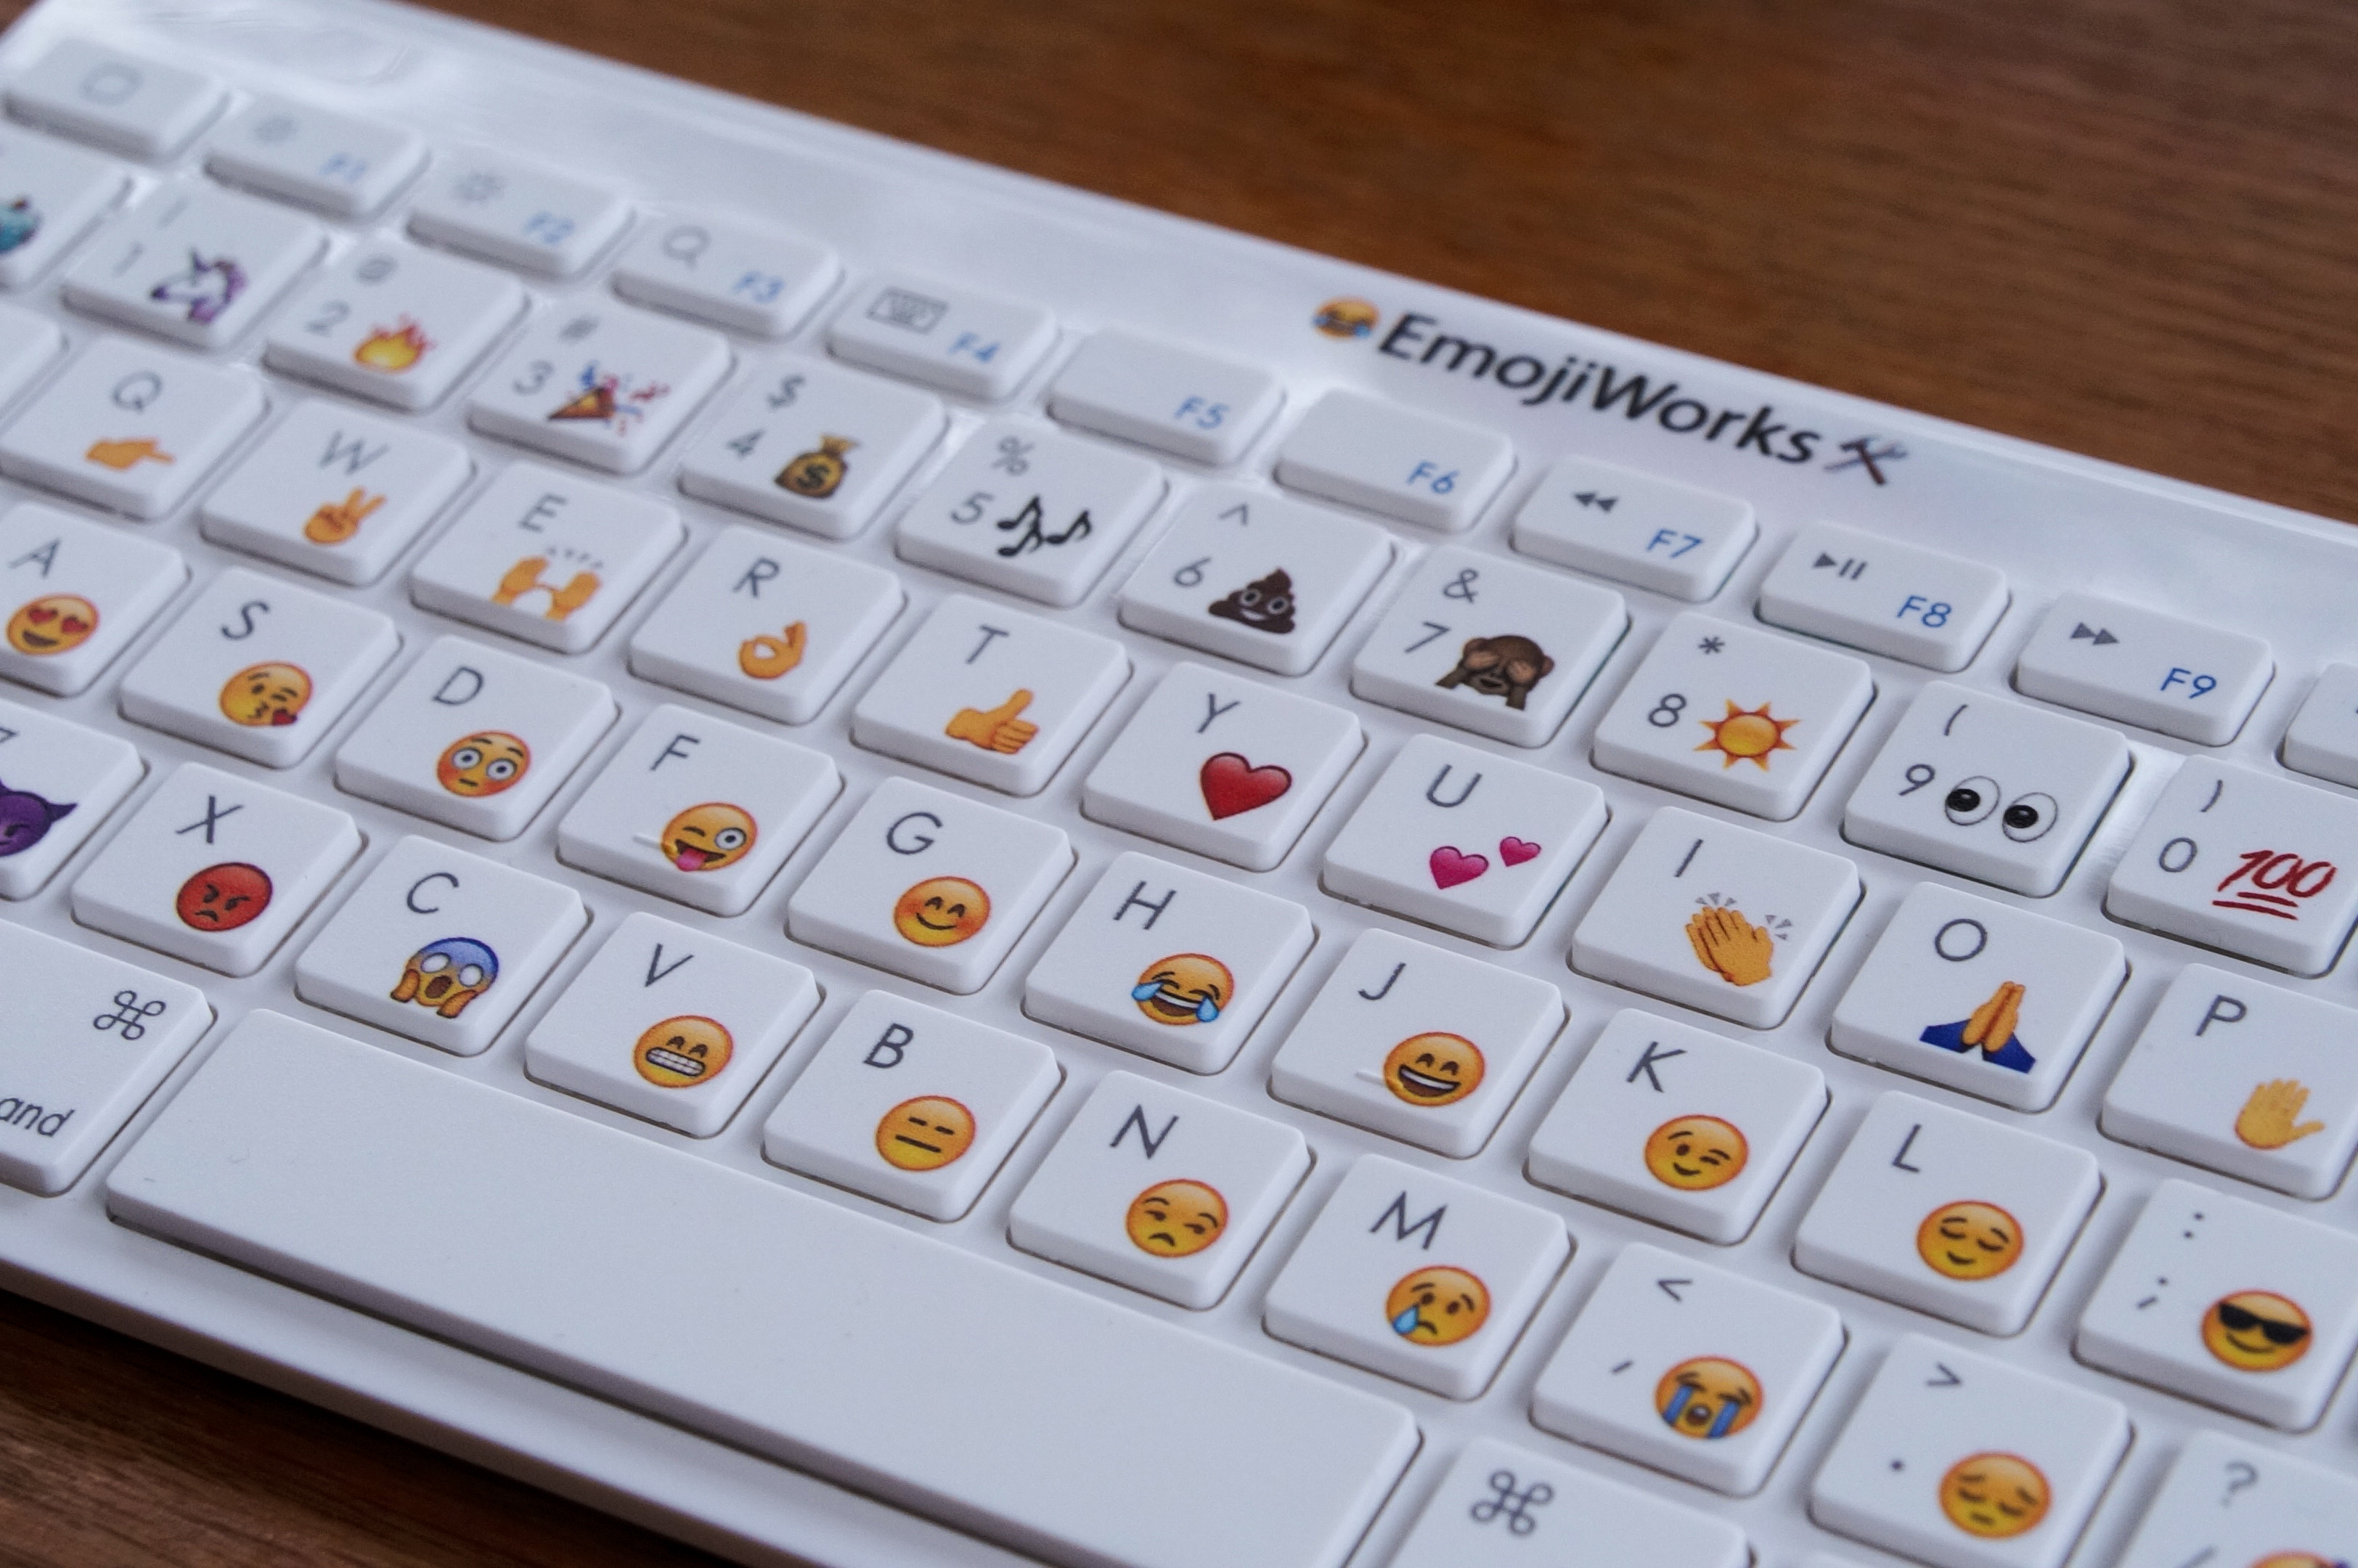 emoji keyboard angle close up.0.0